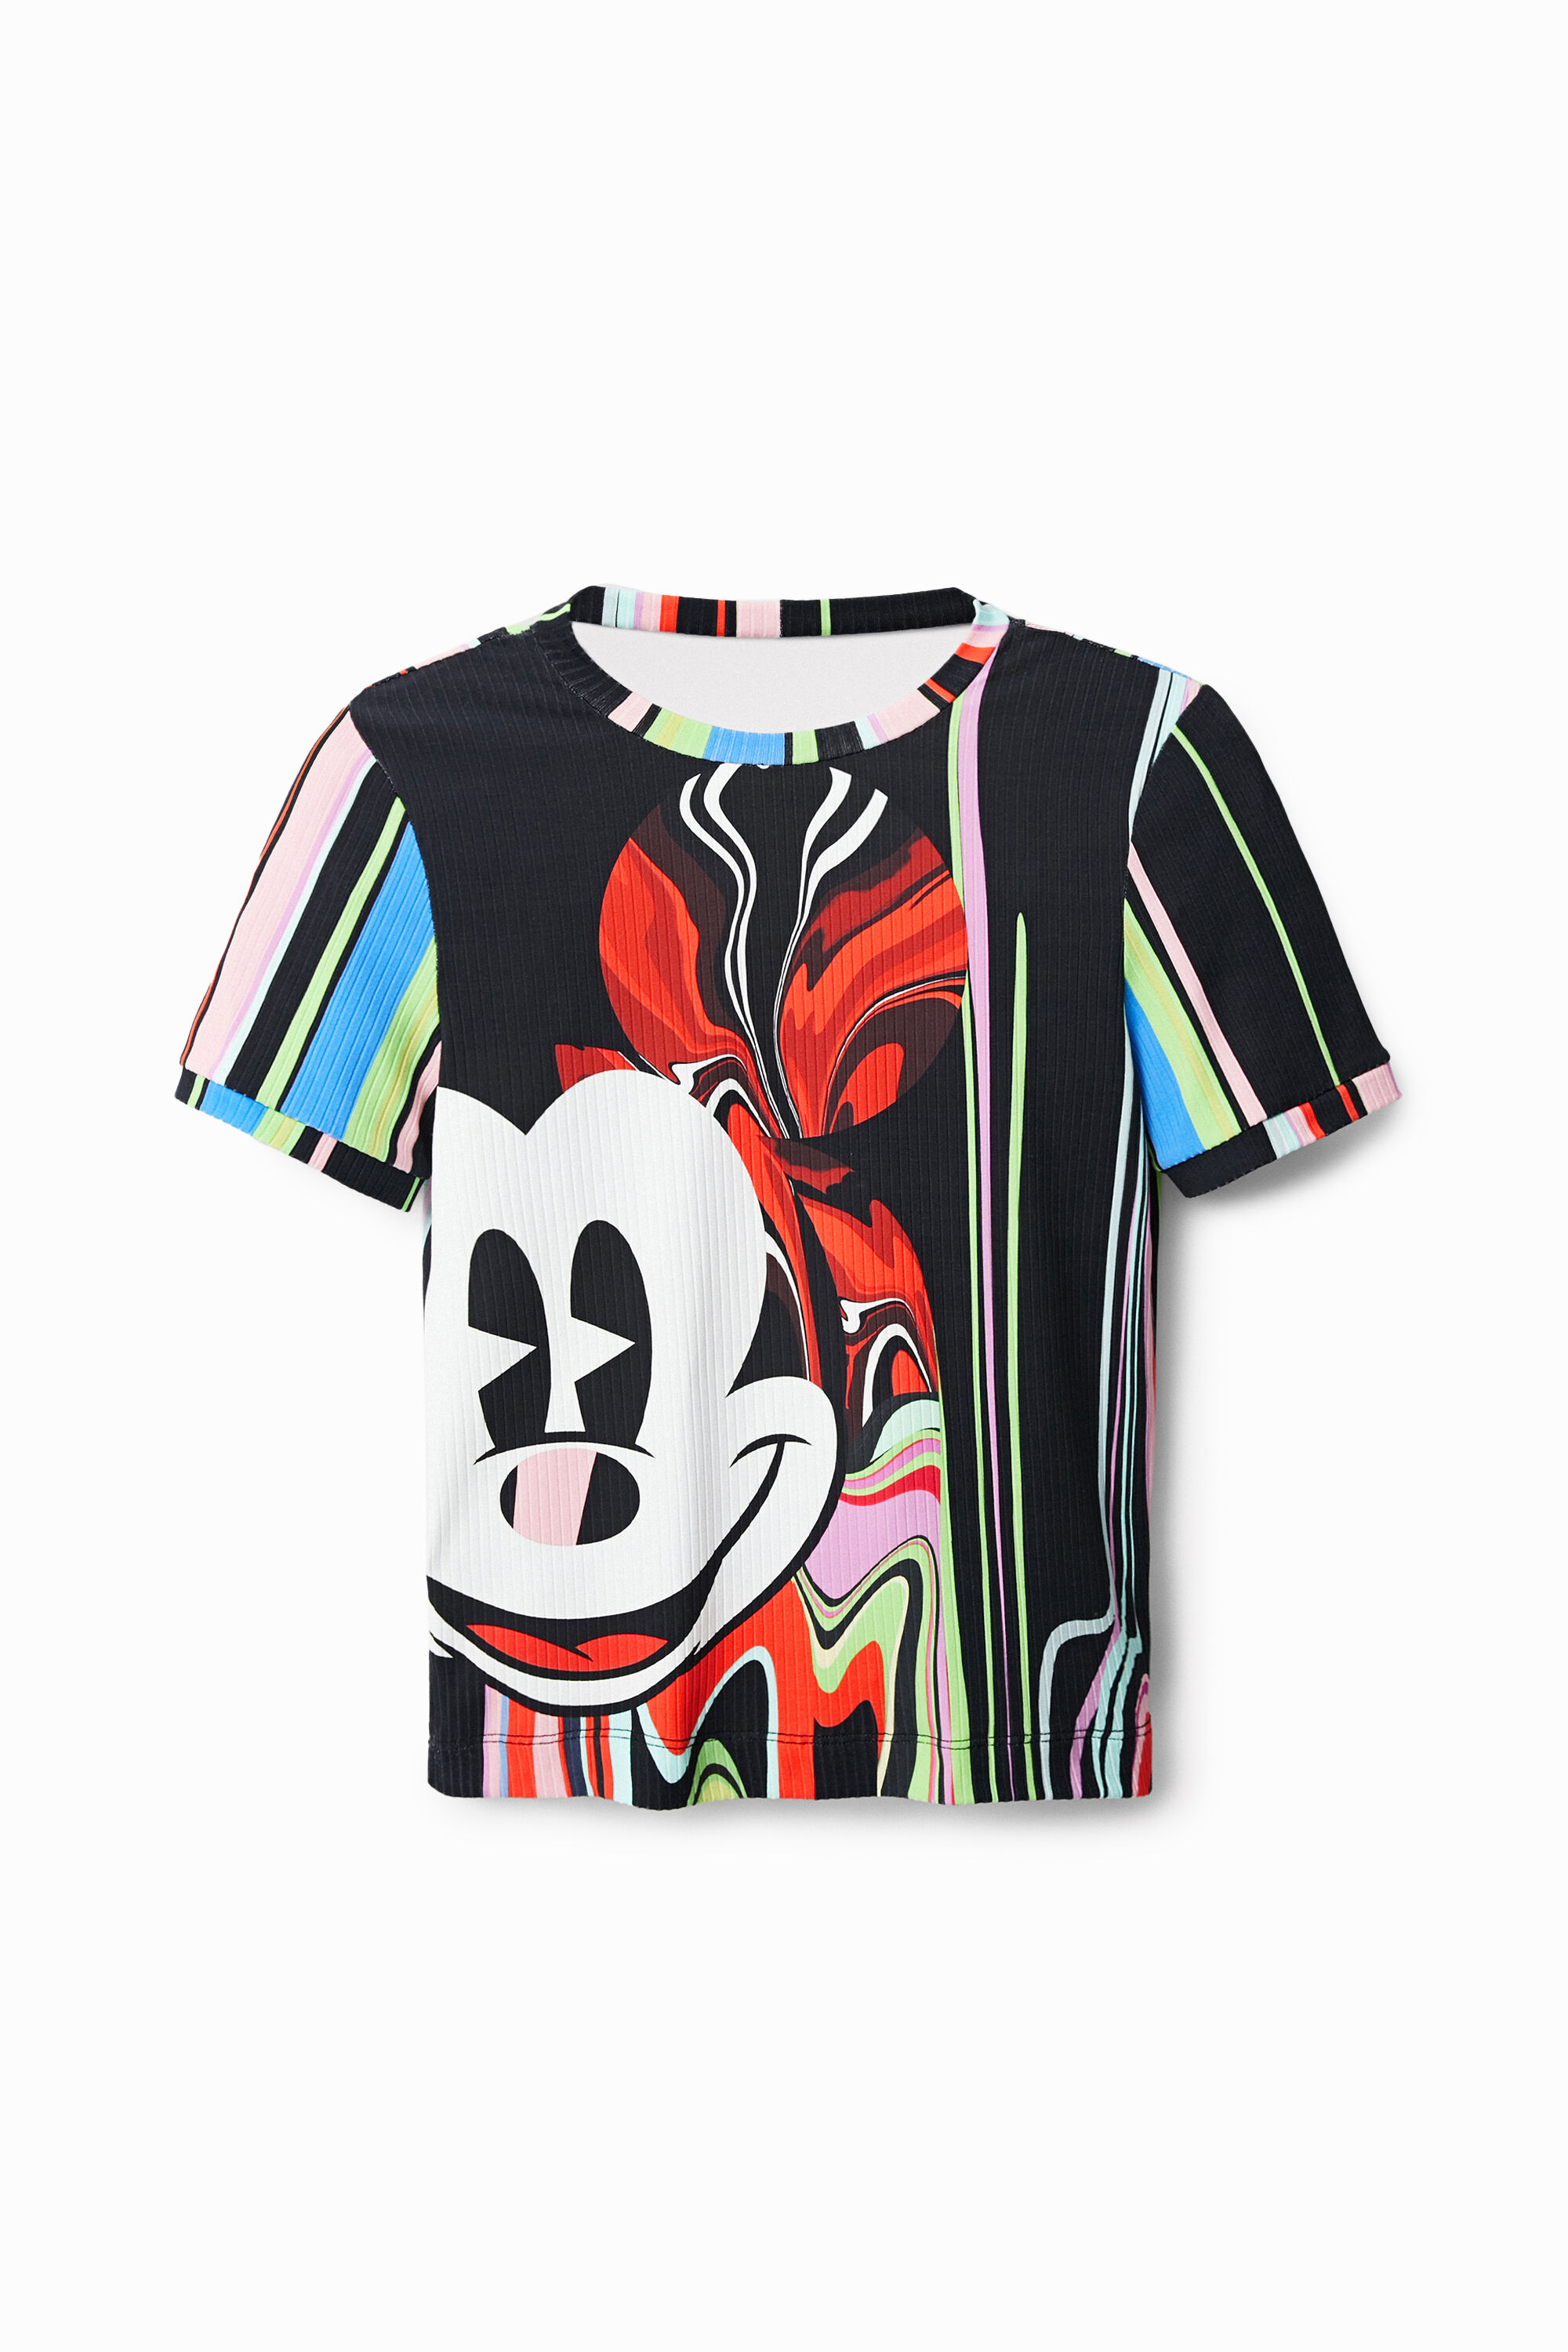 Desigual M. Christian Lacroix Mickey Mouse T-shirt